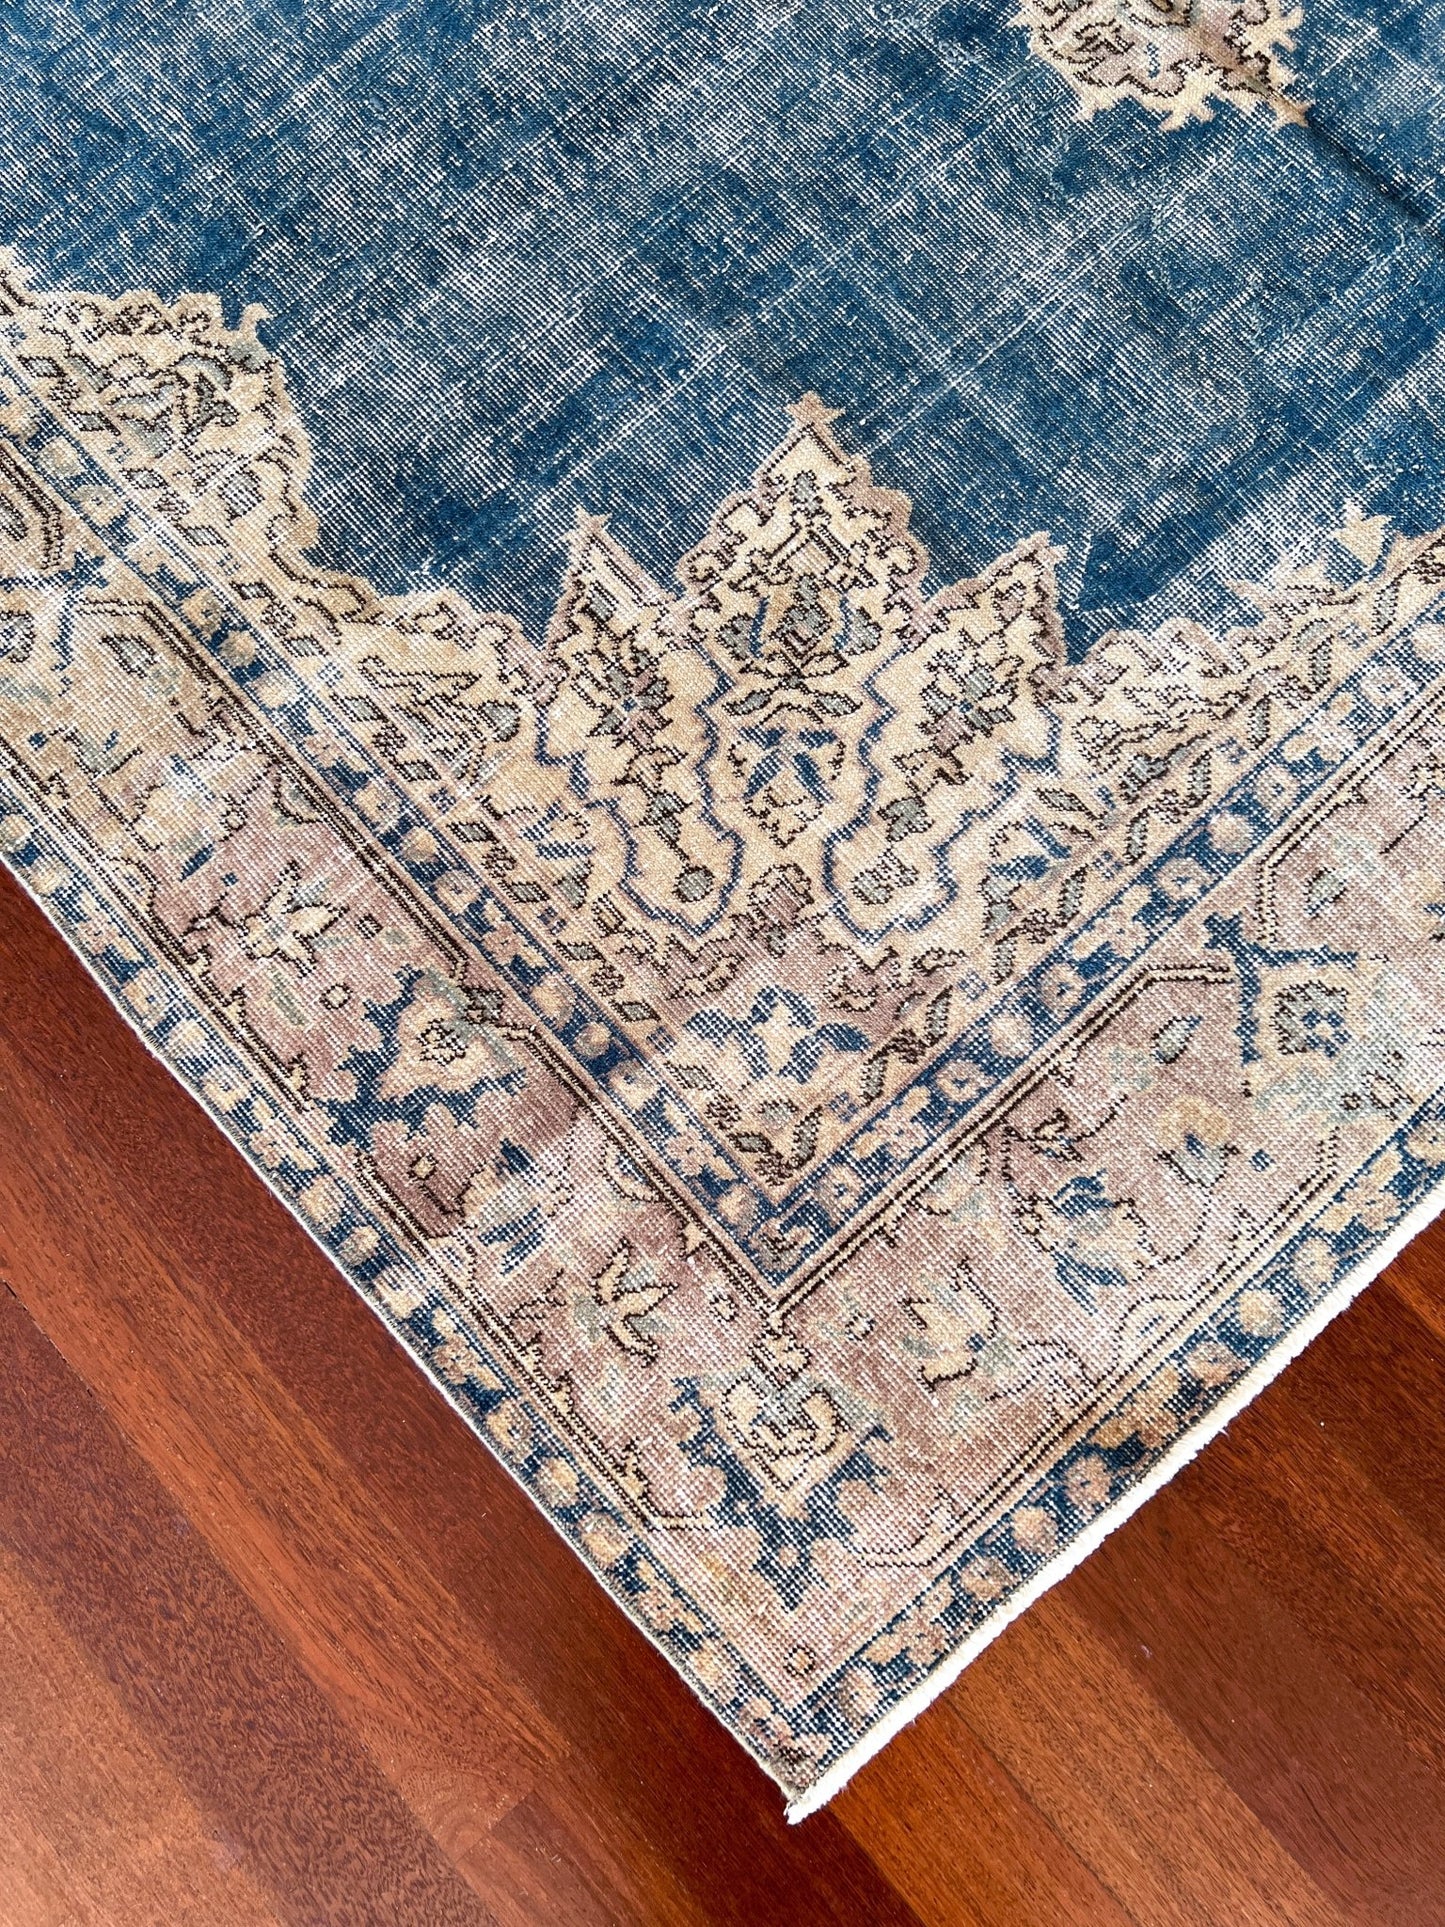 blue yellow large turkish rug shop san francisco bay area rug. oriental rug berkeley buy handmade rug online canada toronto